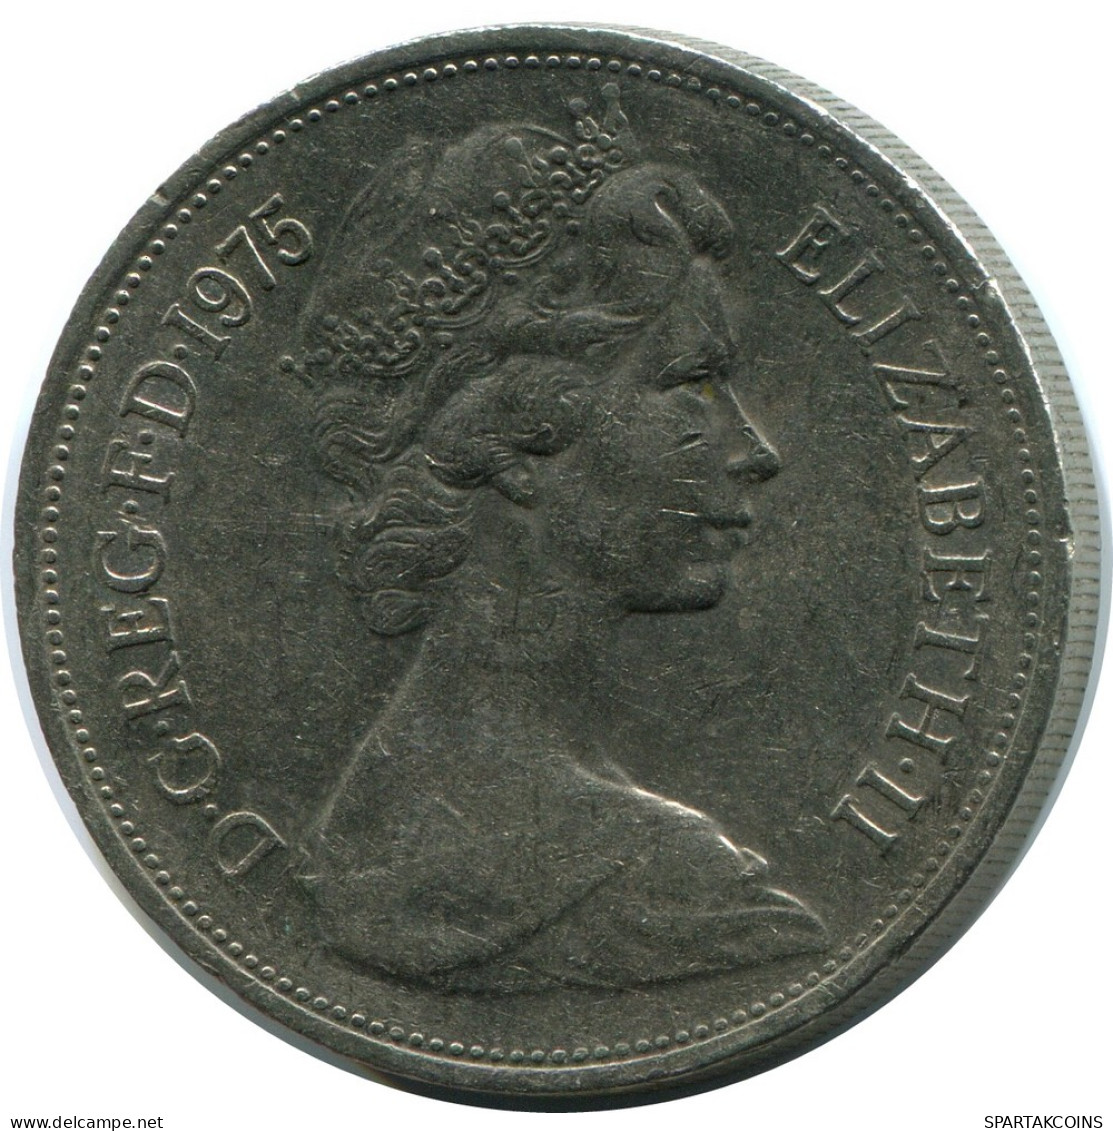 10 NEW PENCE 1975 UK GREAT BRITAIN Coin #AZ021.U - 10 Pence & 10 New Pence